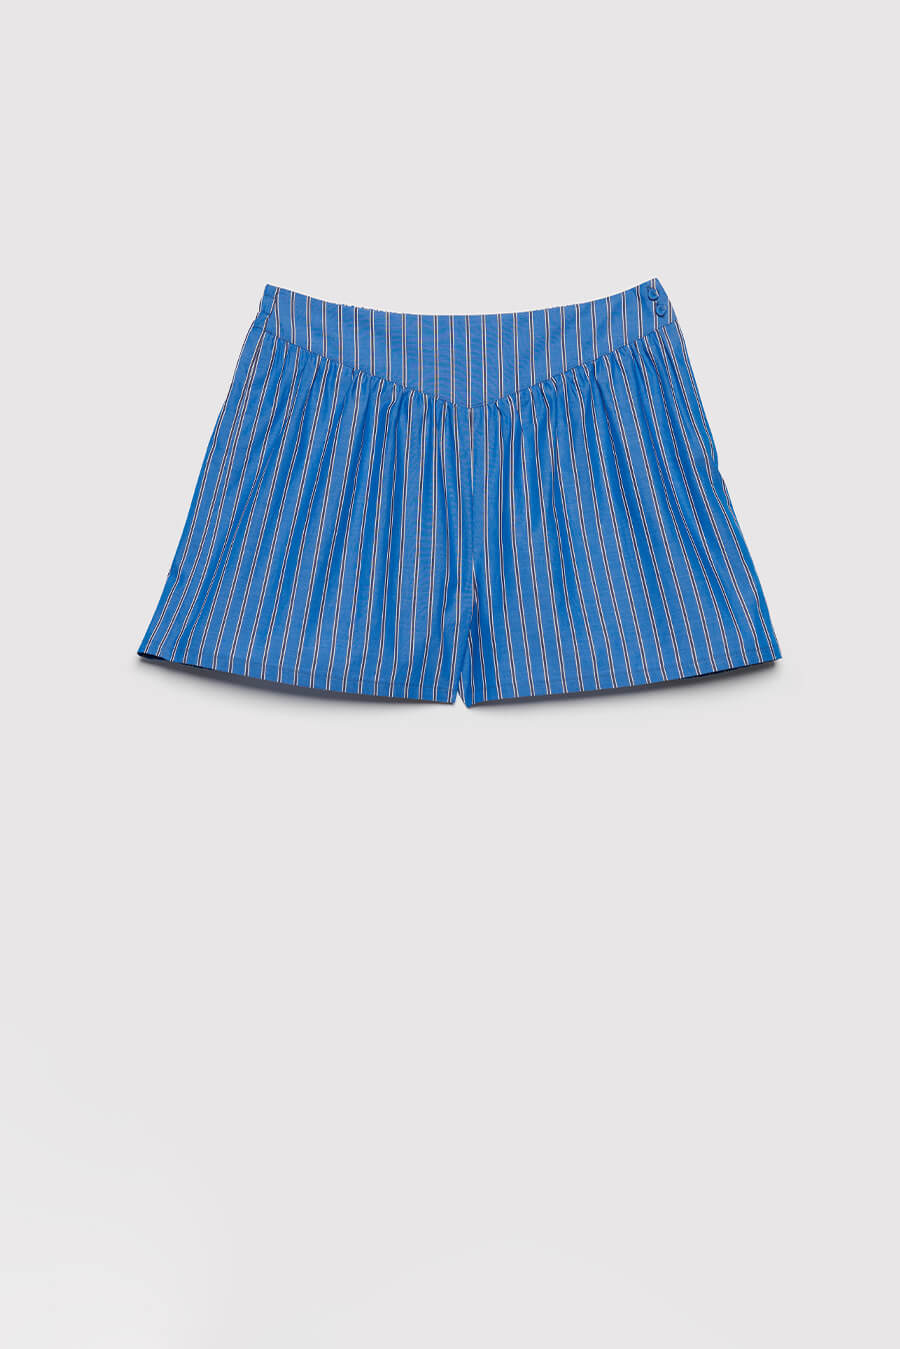 Chimera Sleepwear Linda Striped Shorts